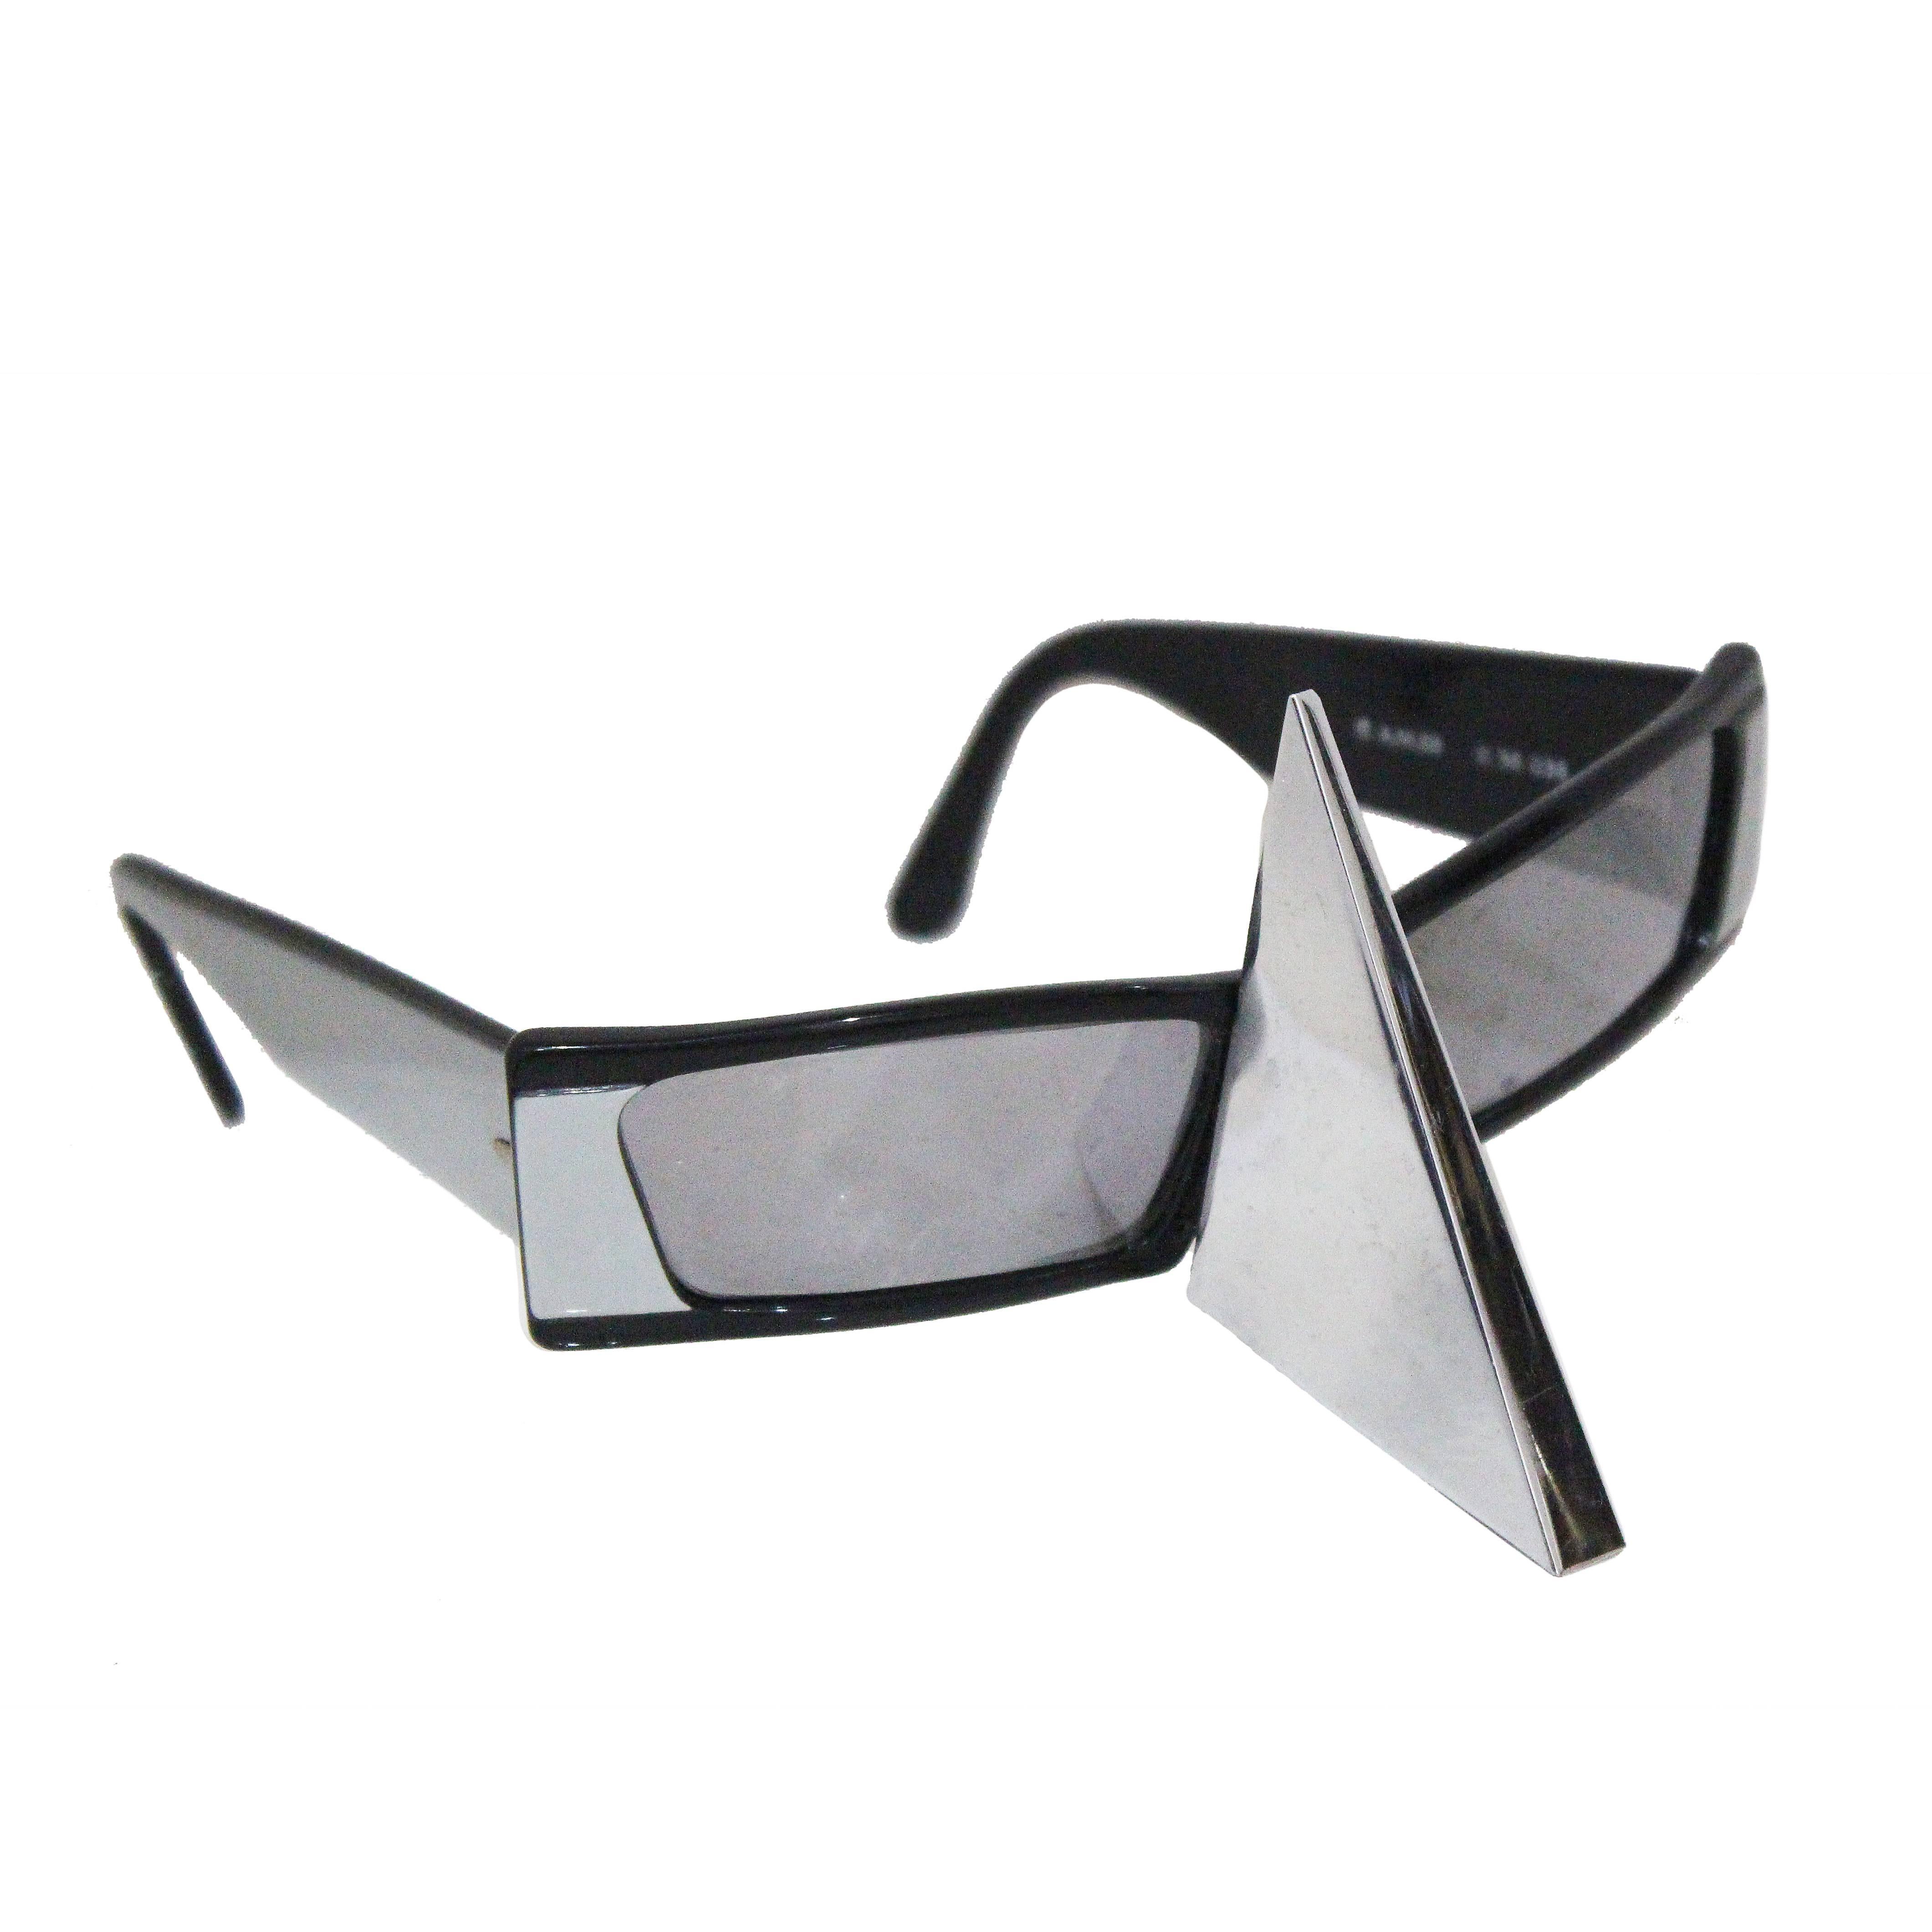 Alain Mikli nose shield sunglasses, c. 1988 